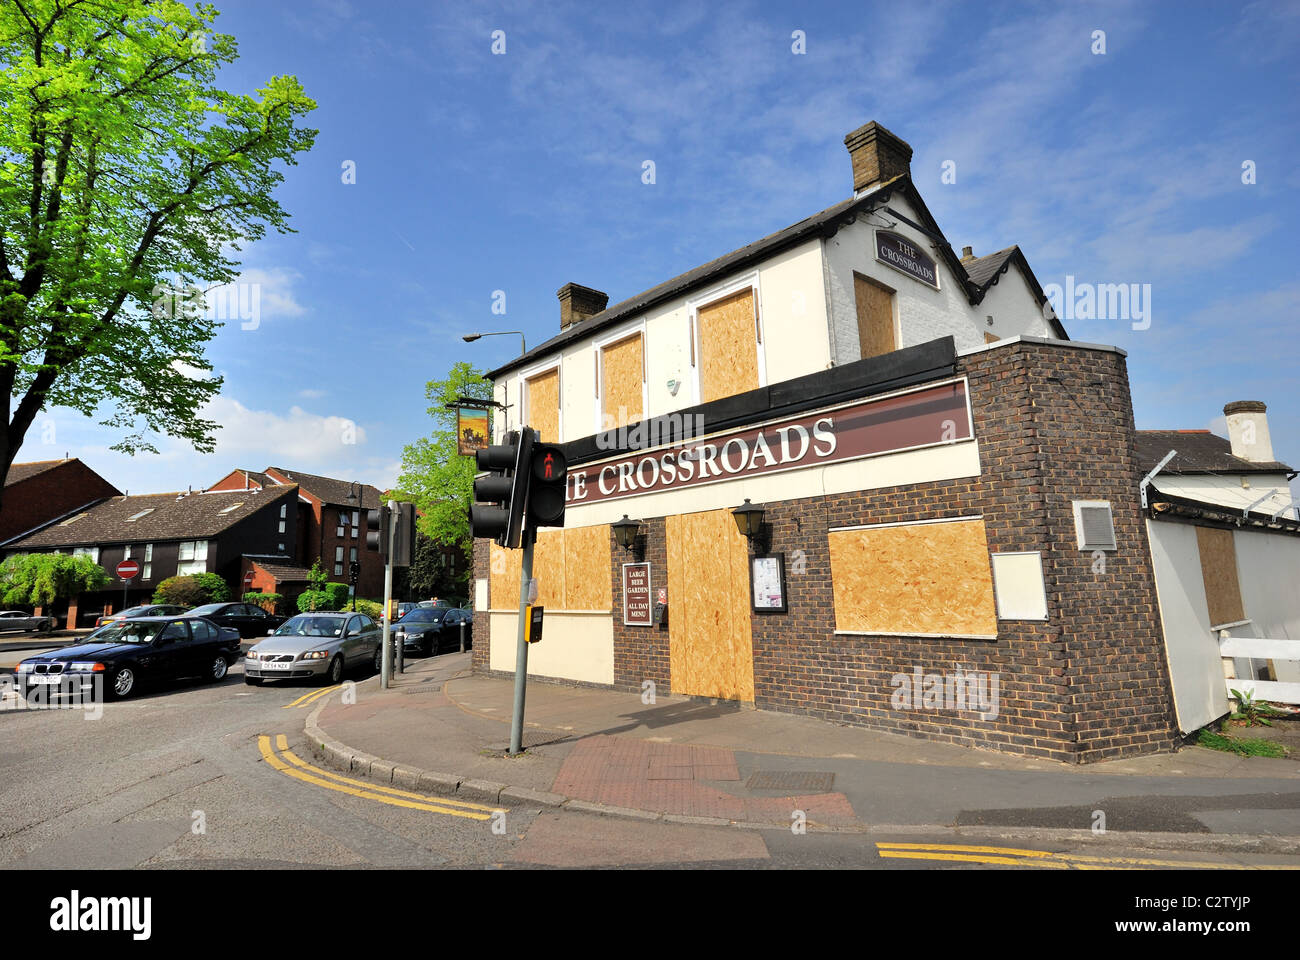 Closed down 'The Crossroads' pub in Shepperton Stock Photo